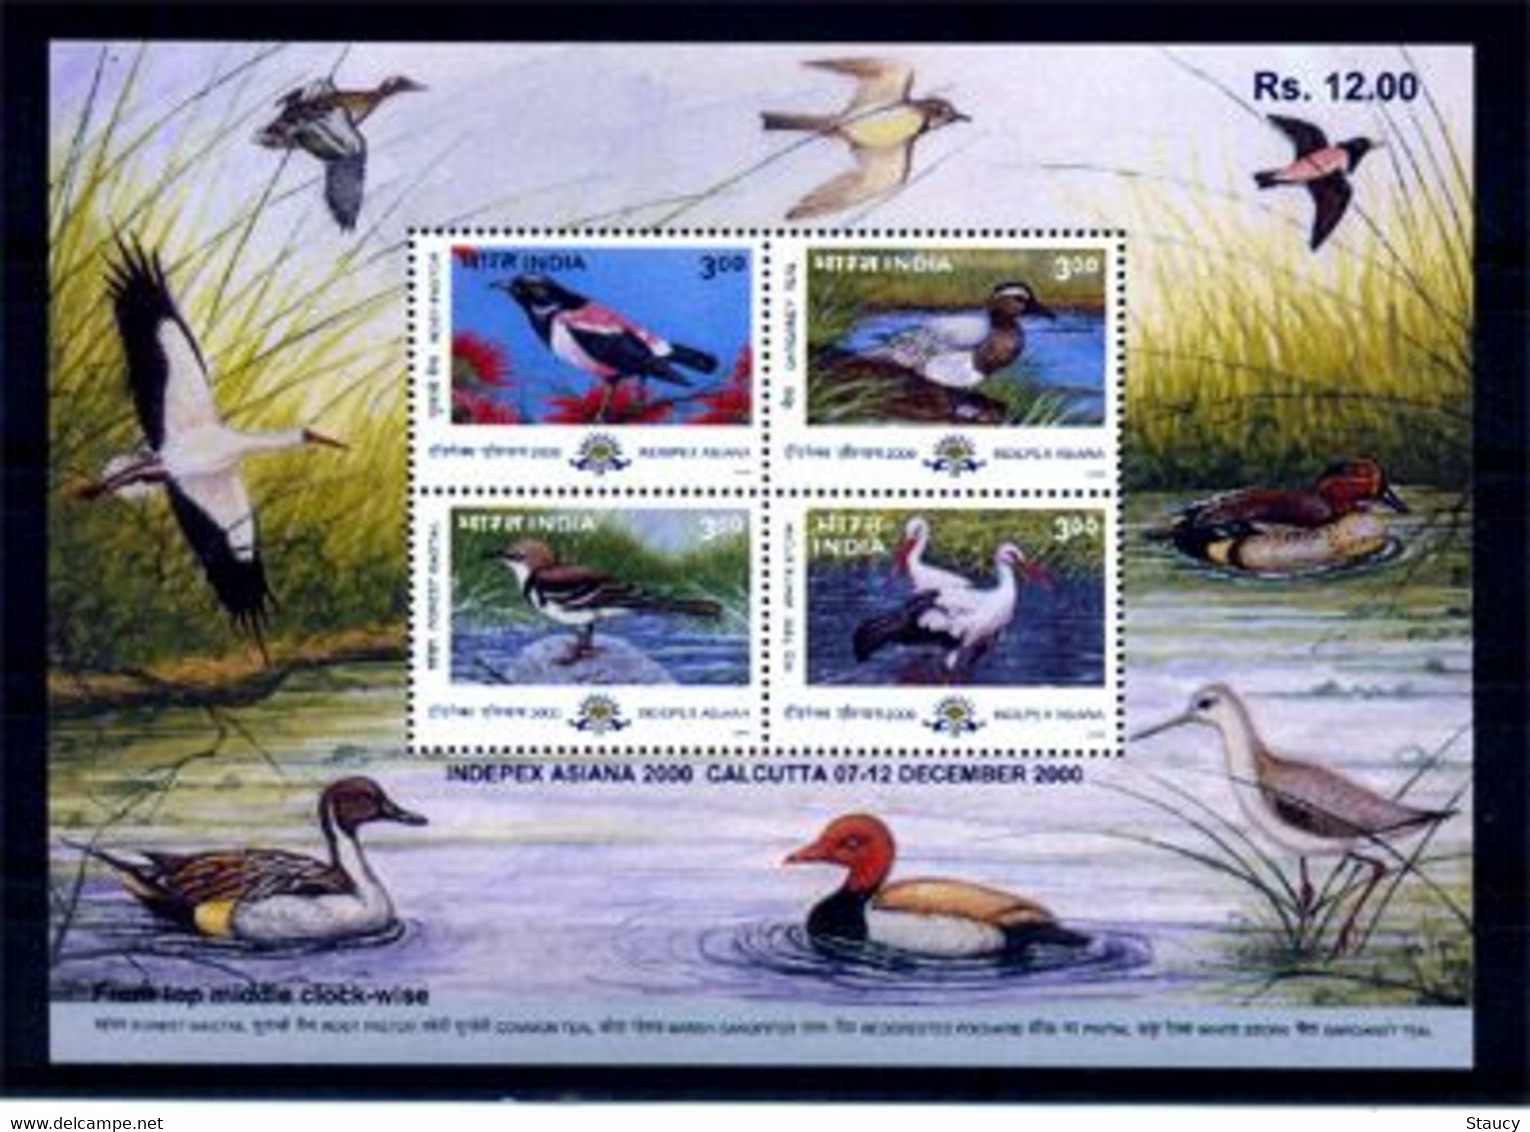 INDIA 2000 Indepex Asiana 2000 International Philatelic Exhibition - BIRDS 4v Miniature Sheet MNH, P.O Fresh & Fine - Cisnes